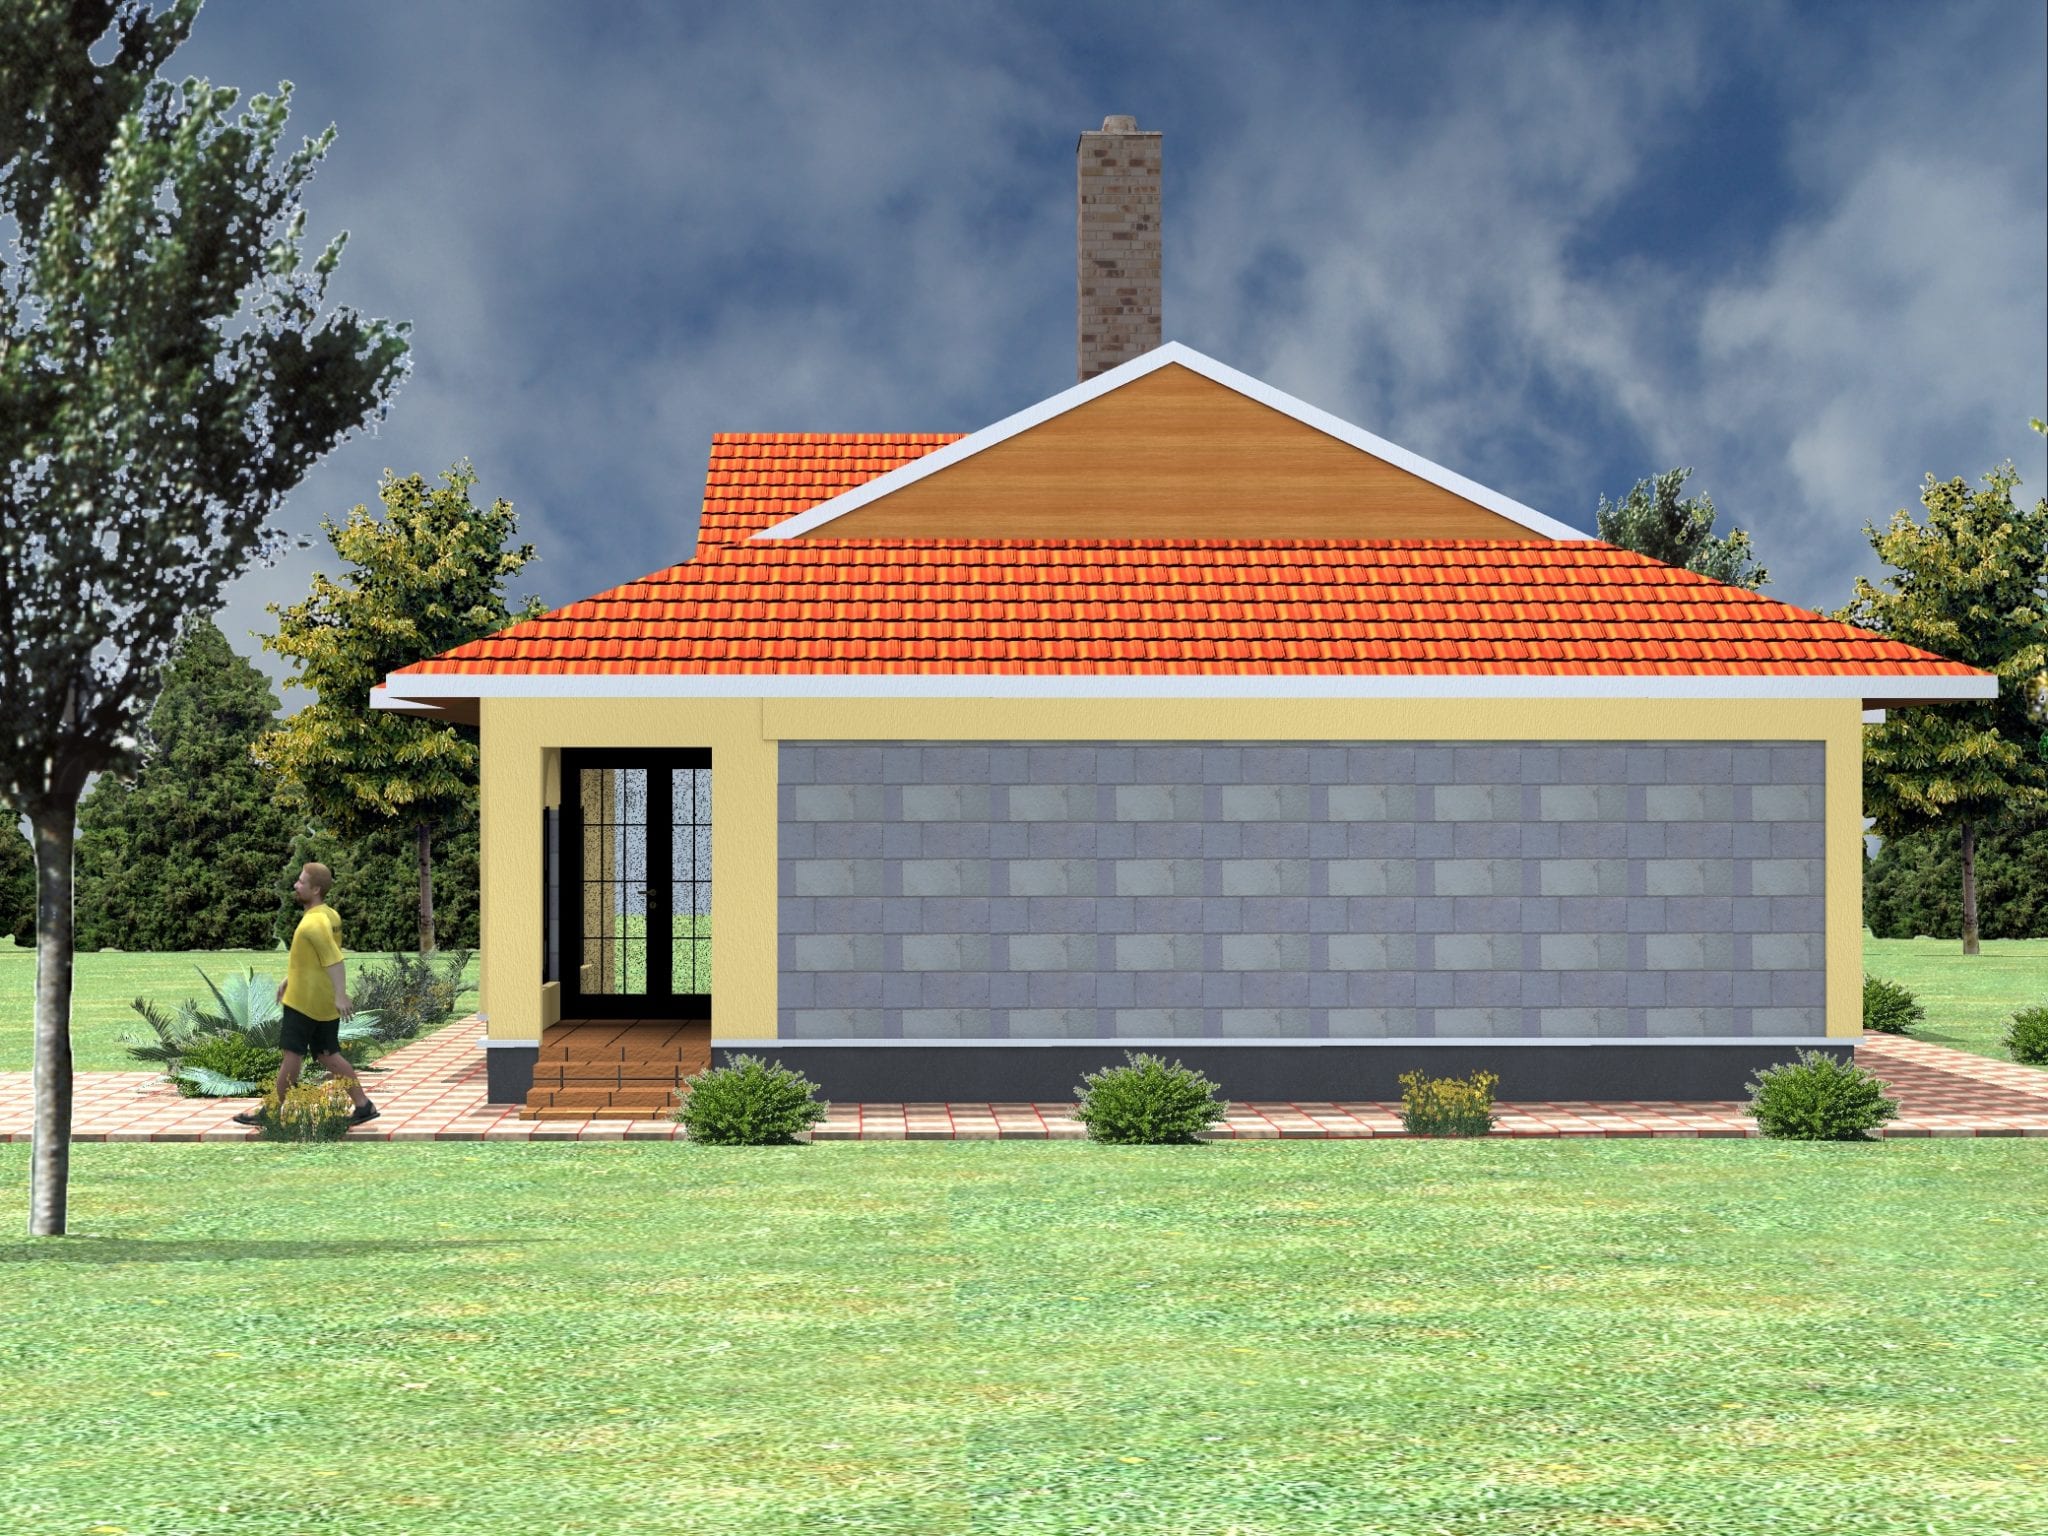 3 bedroom  house  plans  in kenya  pdf  HPD Consult